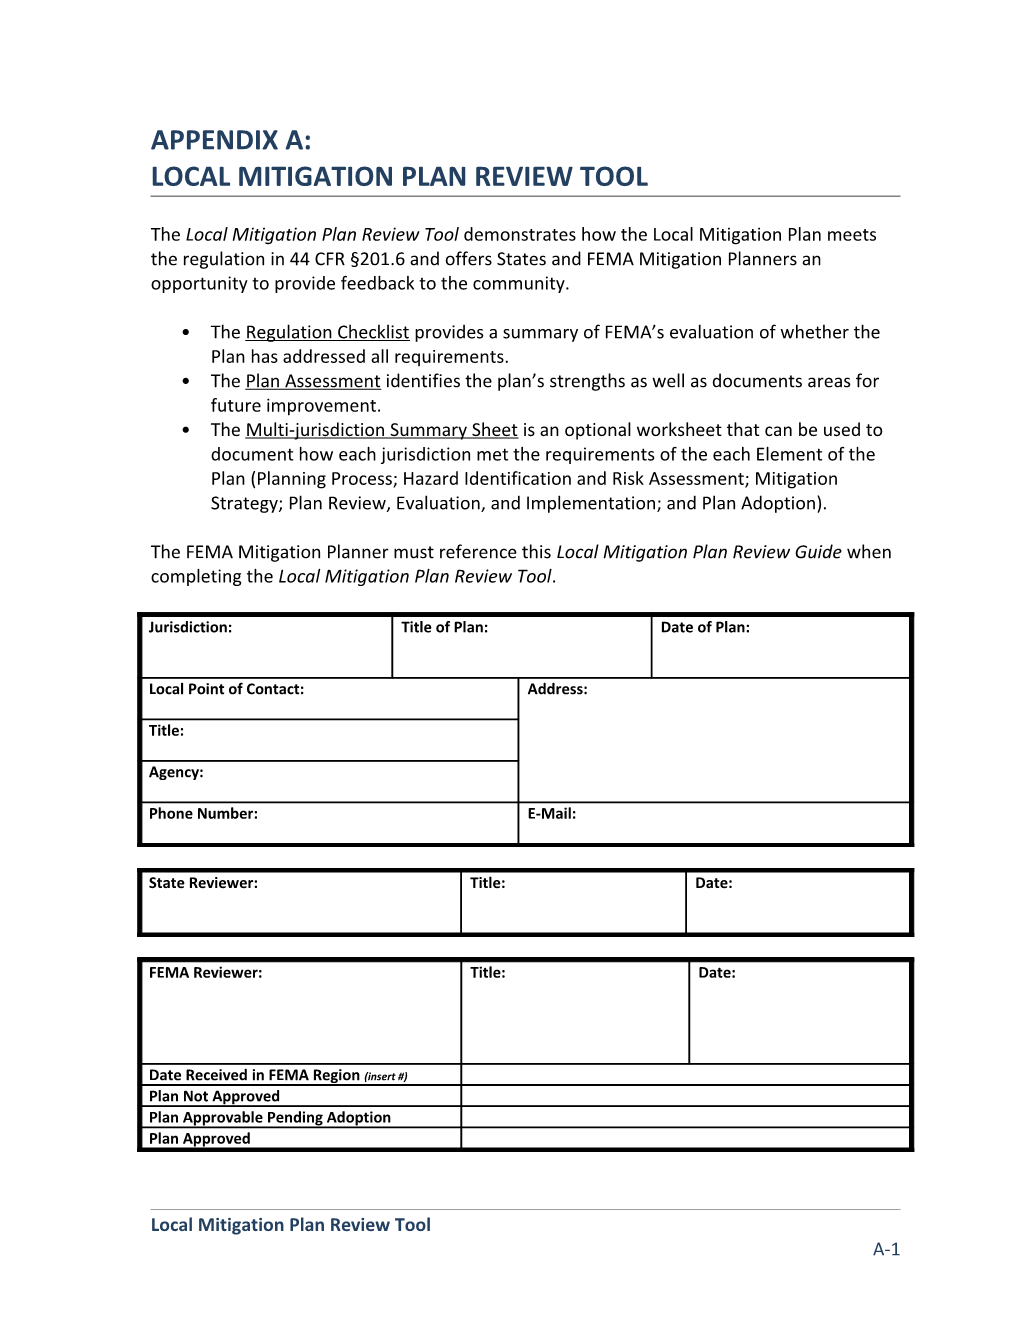 Local Mitigation Plan Review Tool - Appendix A